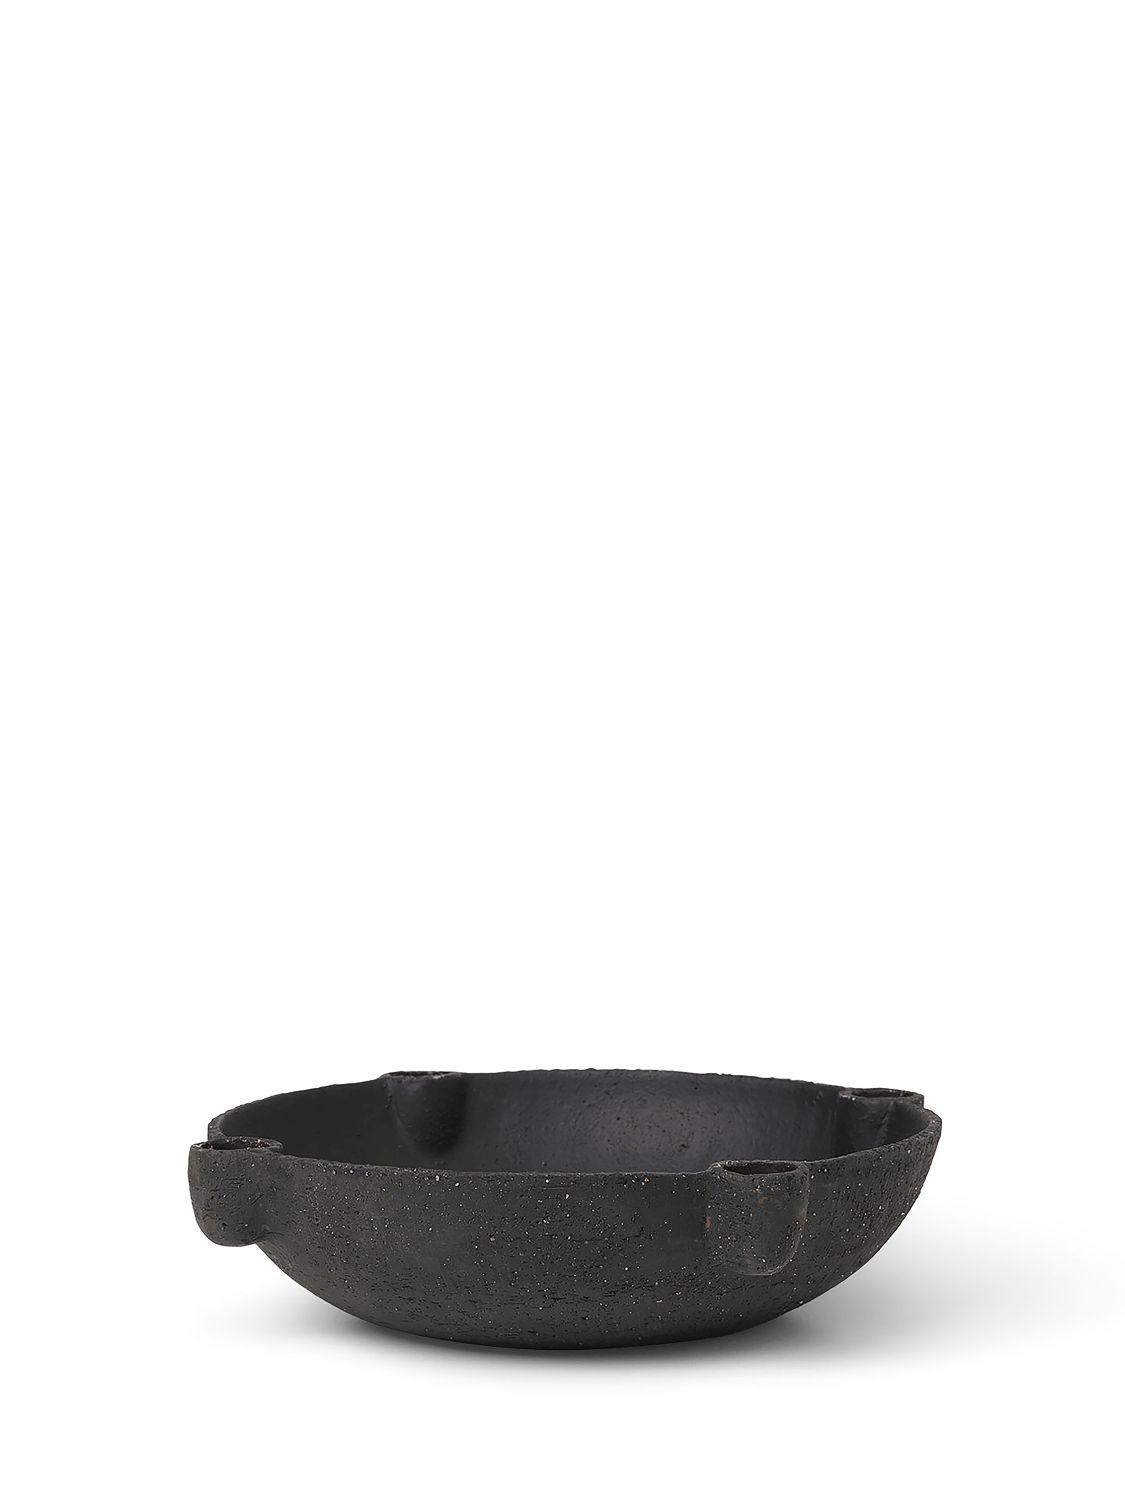 Bowl Kerzenständer Keramik Grau 0